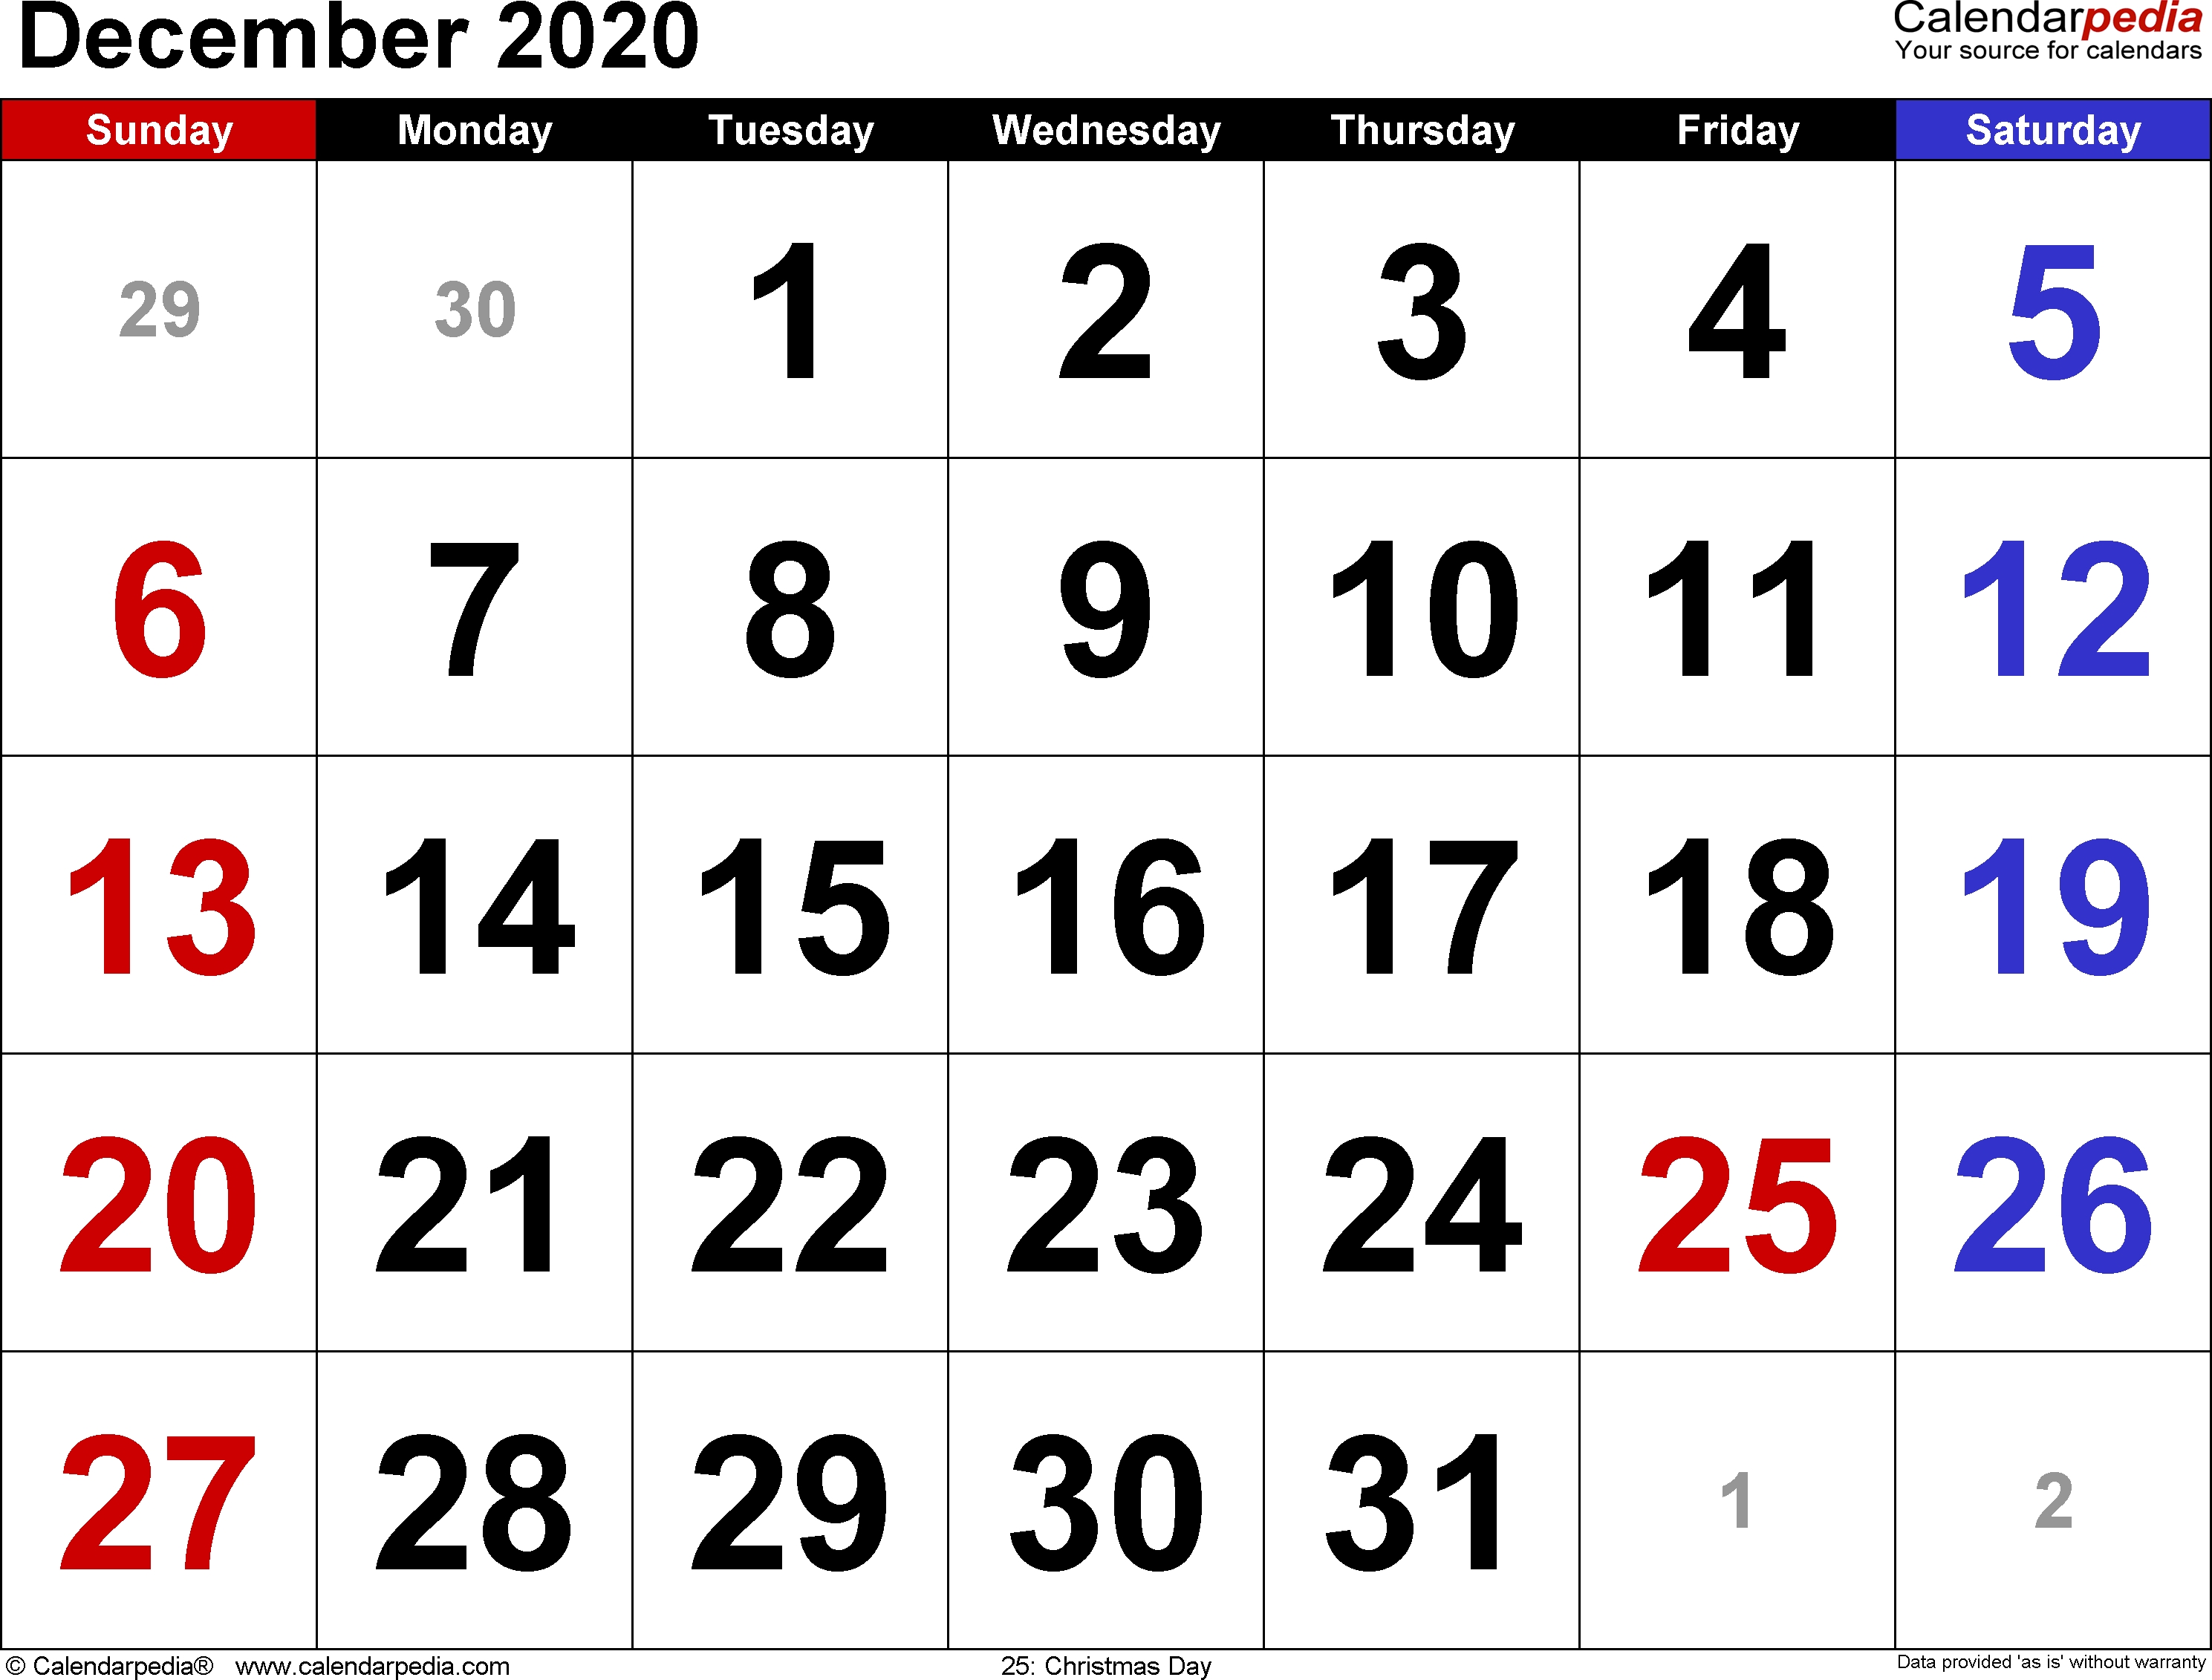 December 2020 Calendars For Word, Excel &amp; Pdf